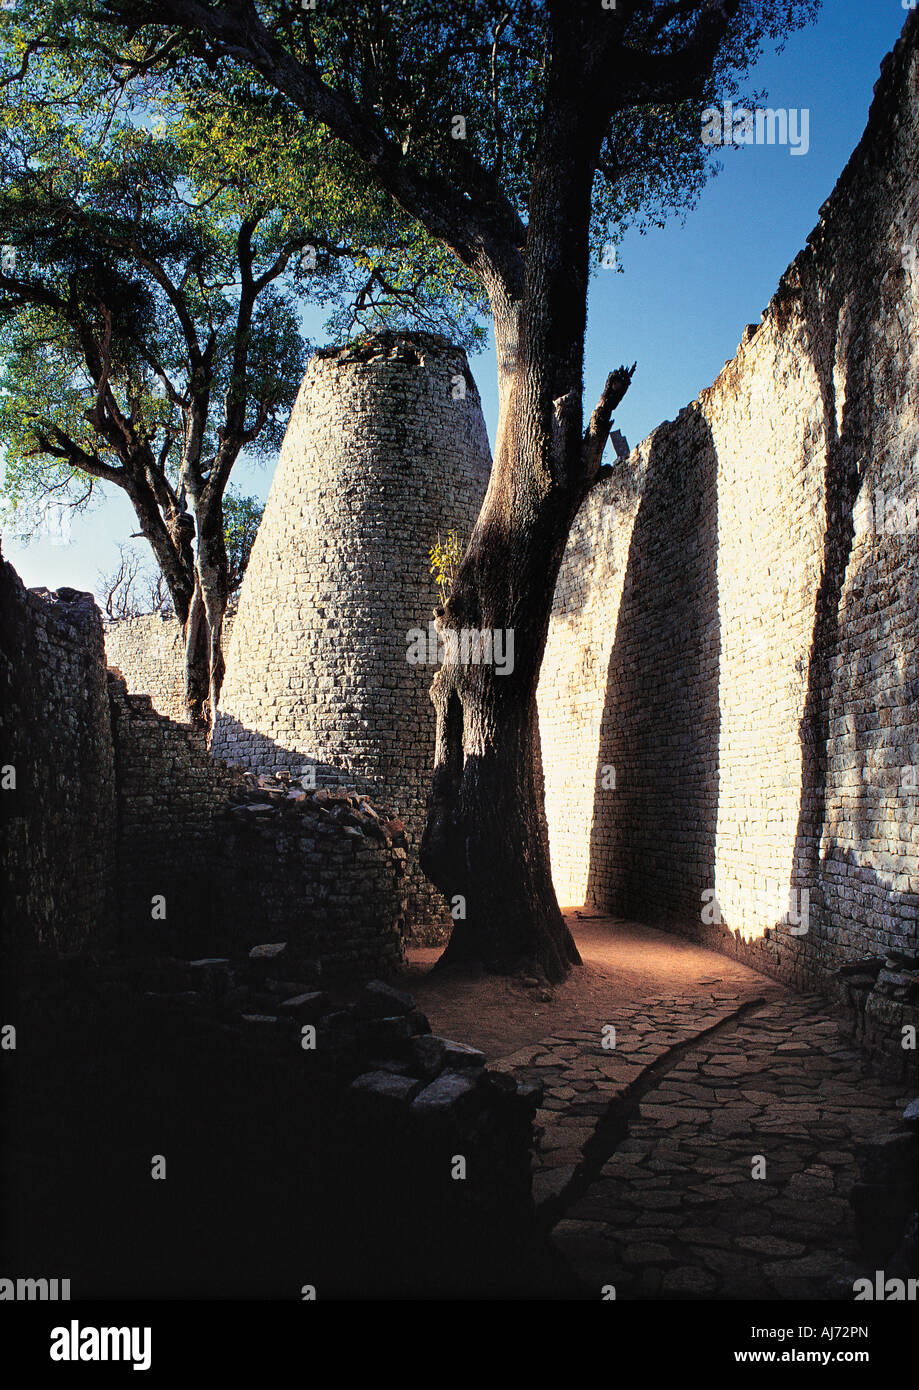 Conical tower and wall at Great Zimbabwe ruins Masvingo Zimbabwe Stock Photo